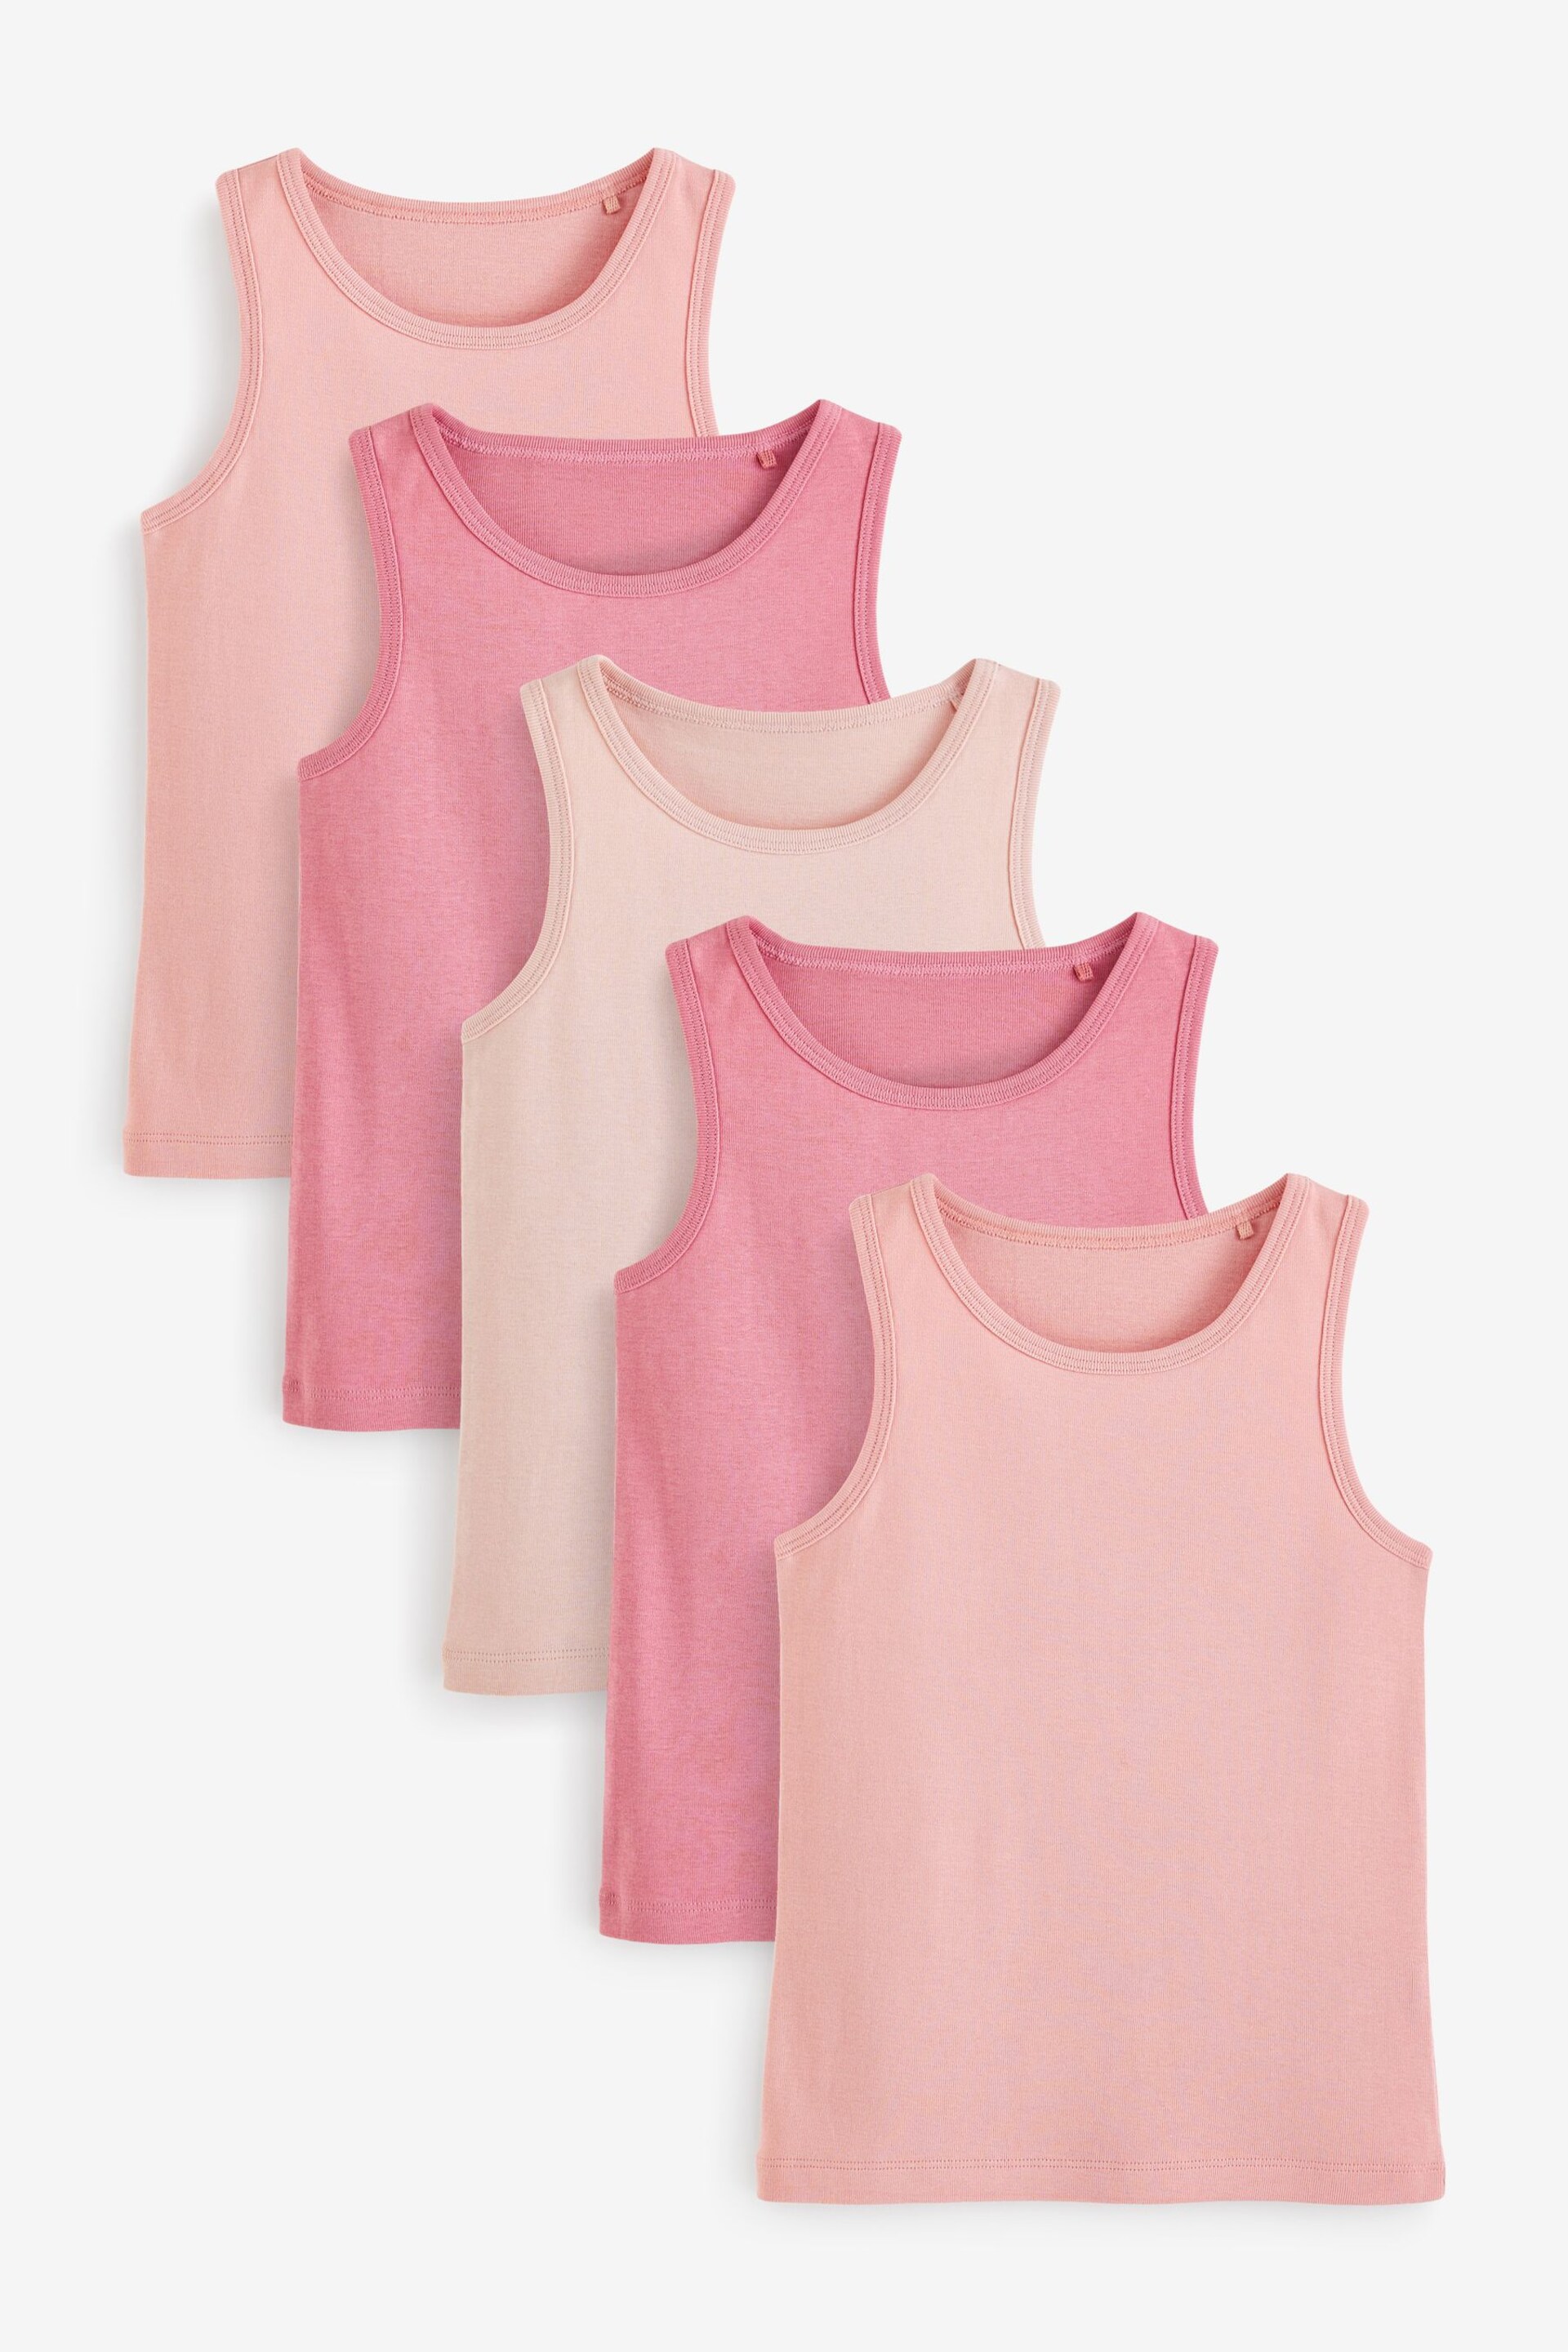 Multi Pastel Pink Vest 5 Pack (1.5-16yrs) - Image 1 of 8